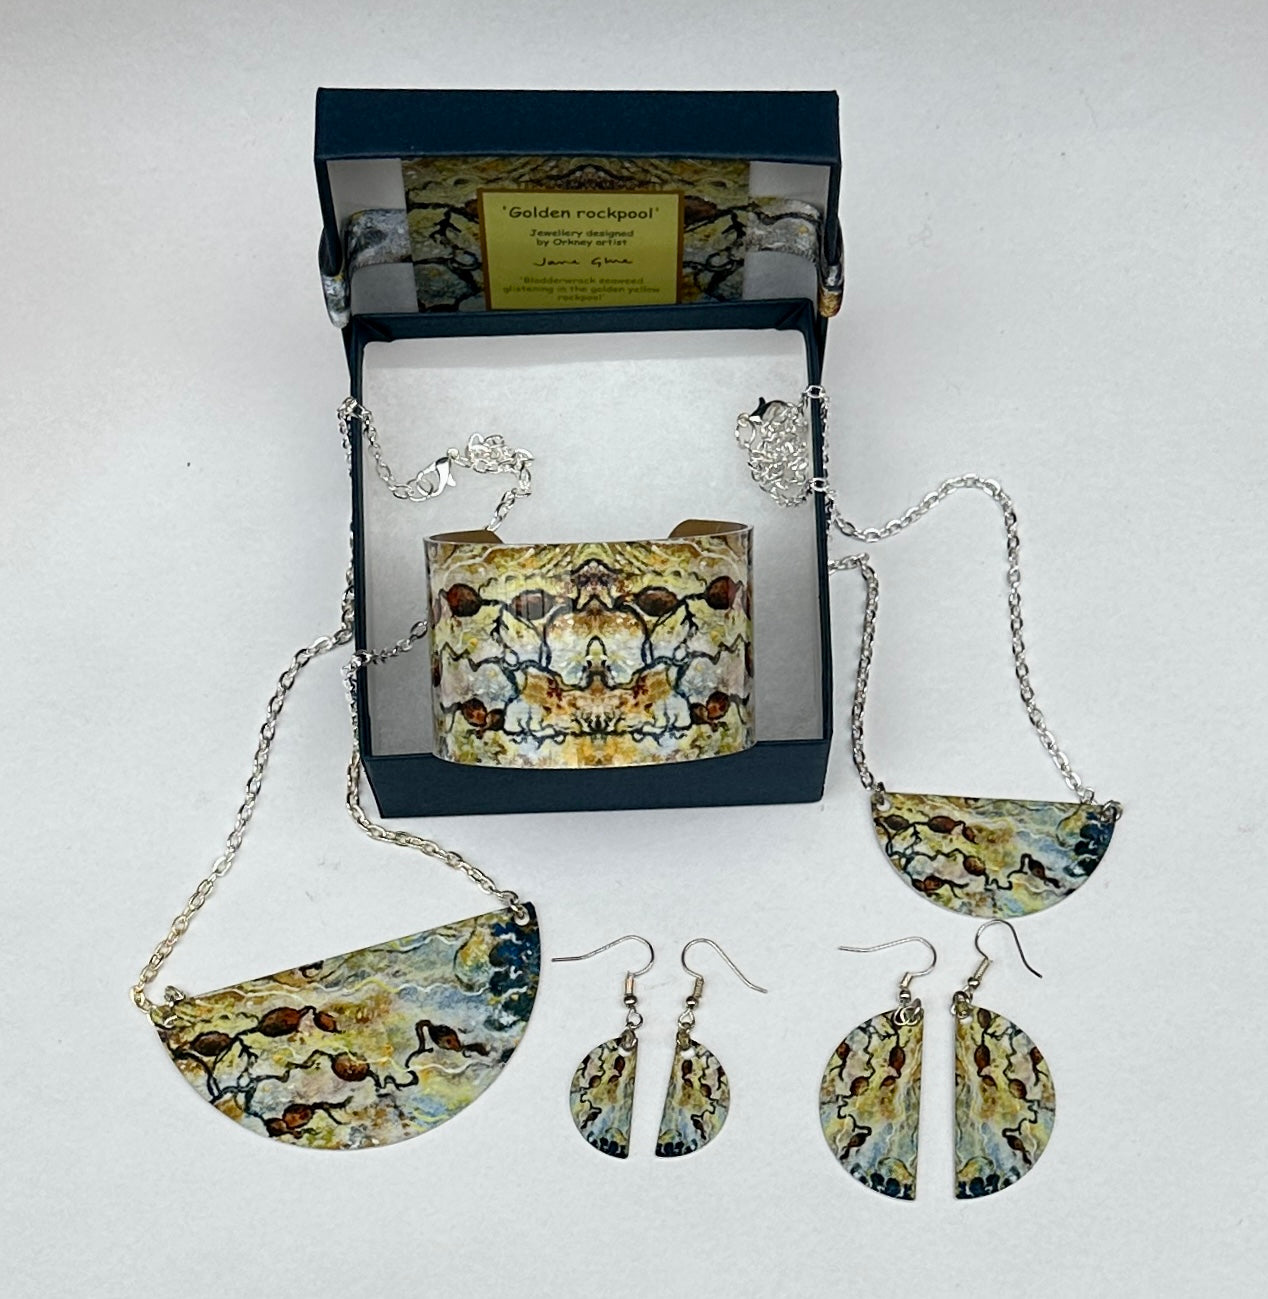 Jewellery by Jane Glue, 'Golden rockpool' Earrings/large semi-circle